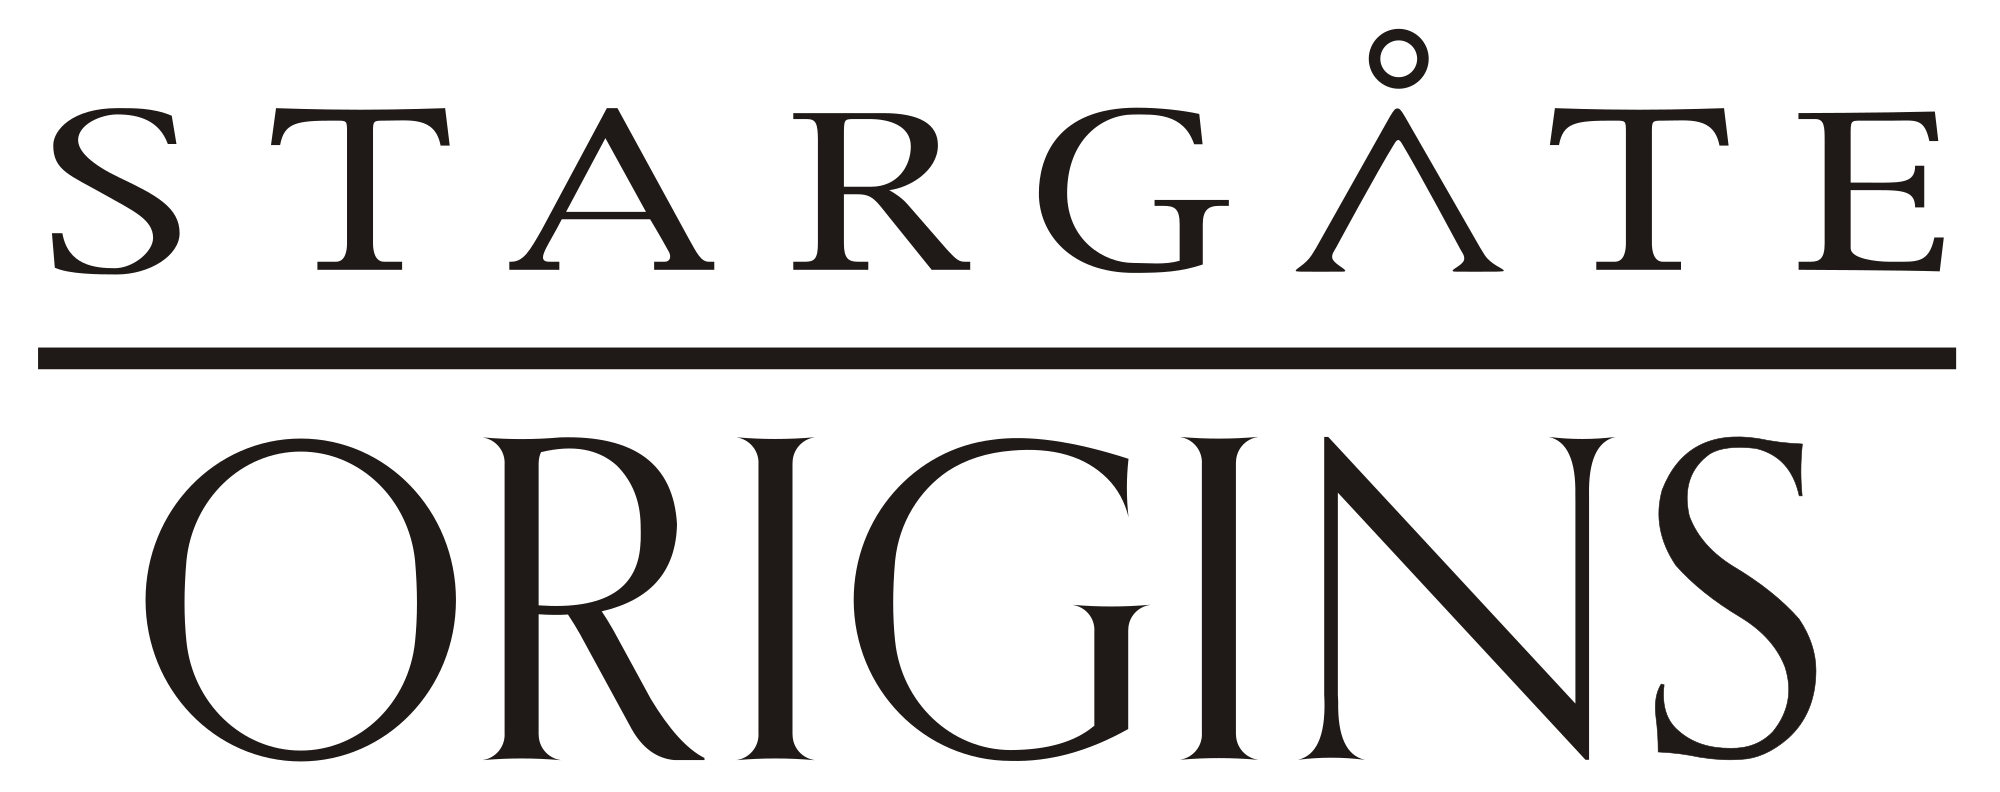 Origins Logo - File:Stargate Origins 2018 logo.svg - Wikimedia Commons